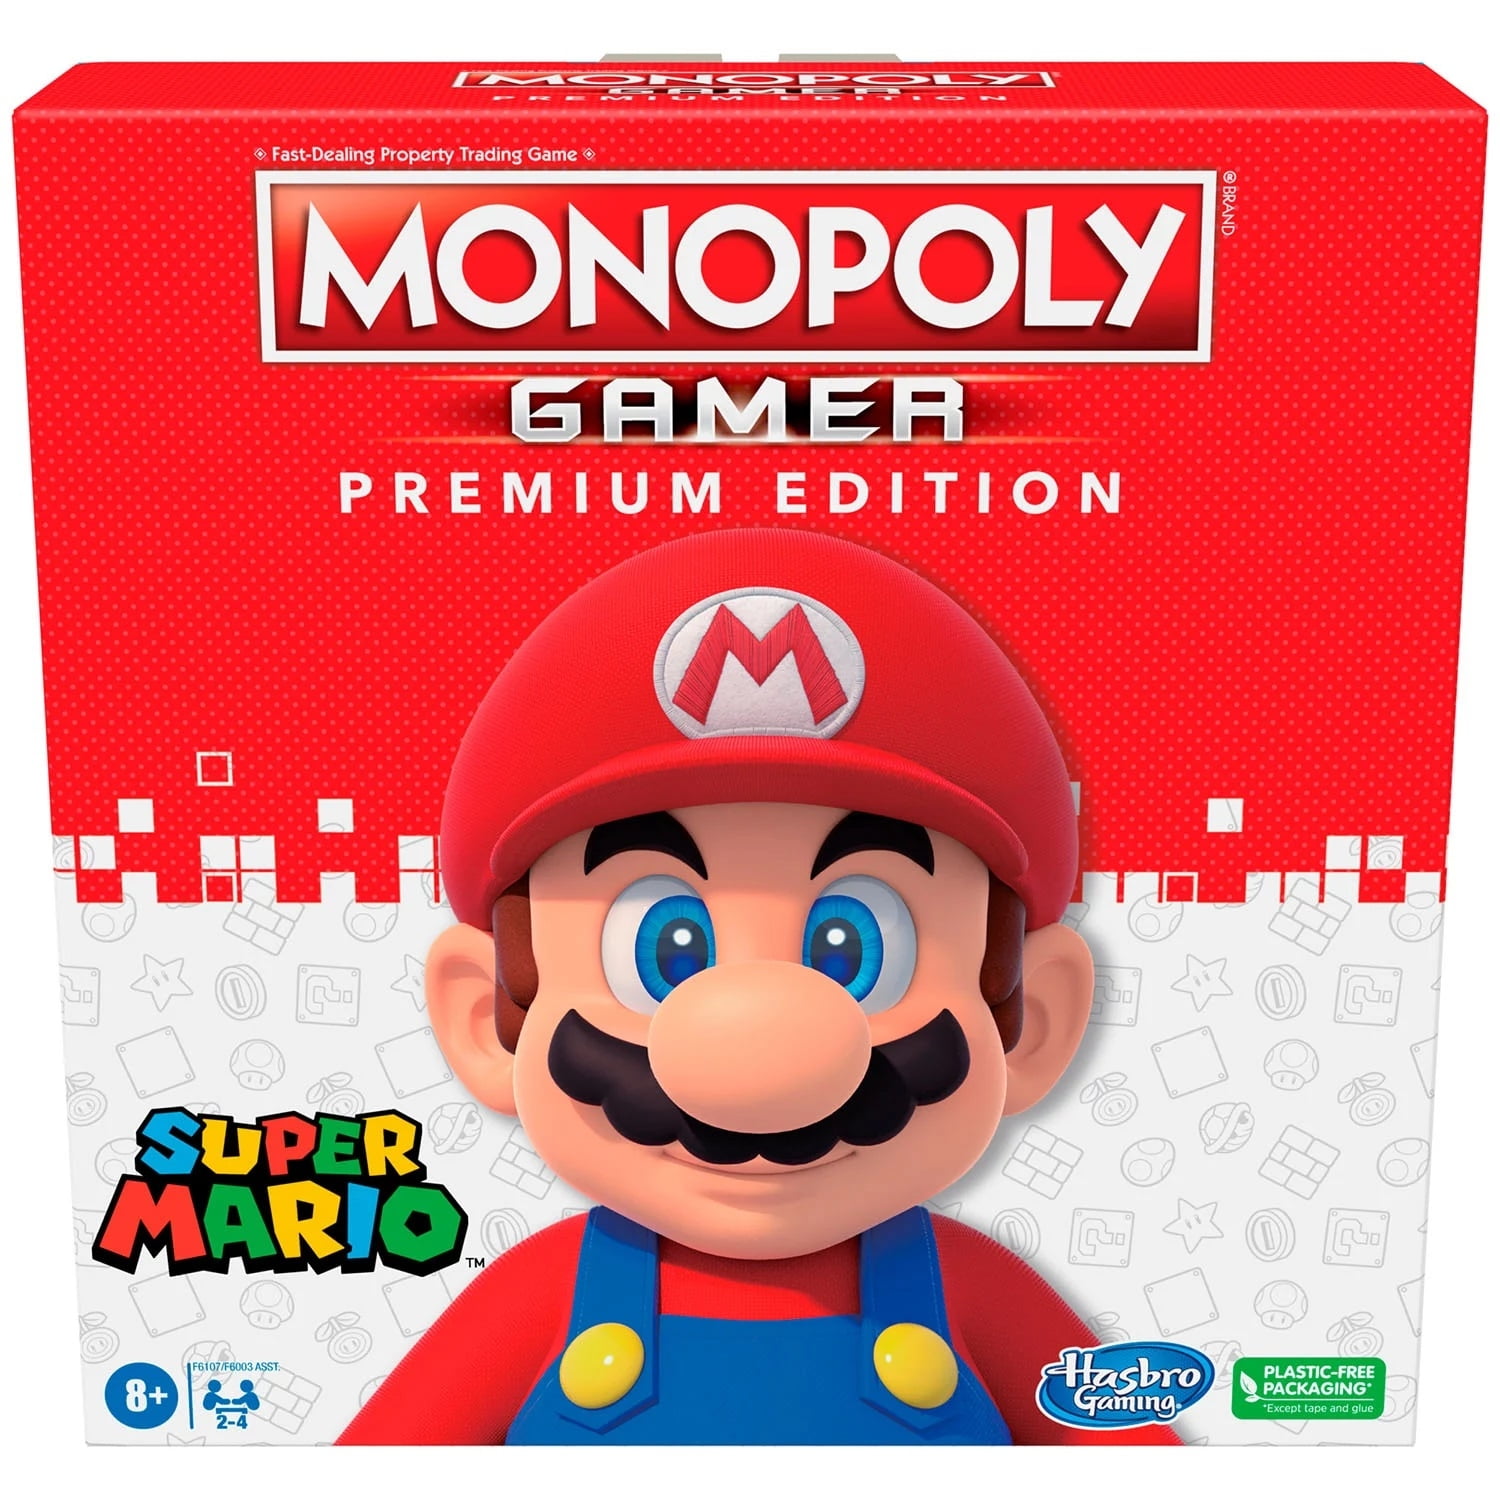 Monopoly Gamer Premium Edition 